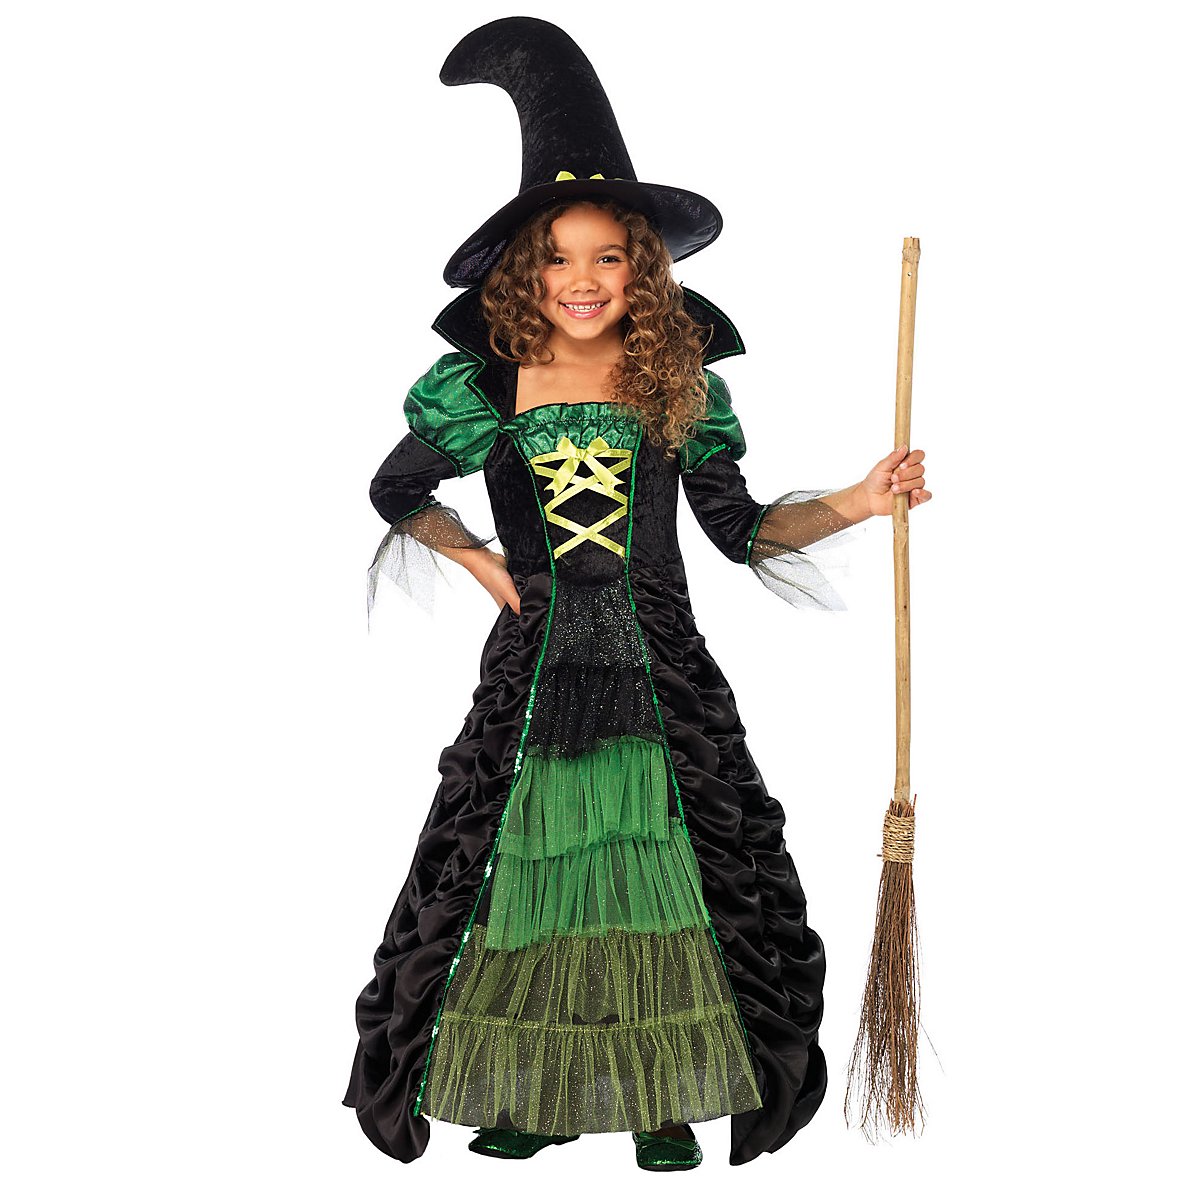 Bog witch costume for children - kidomio.com